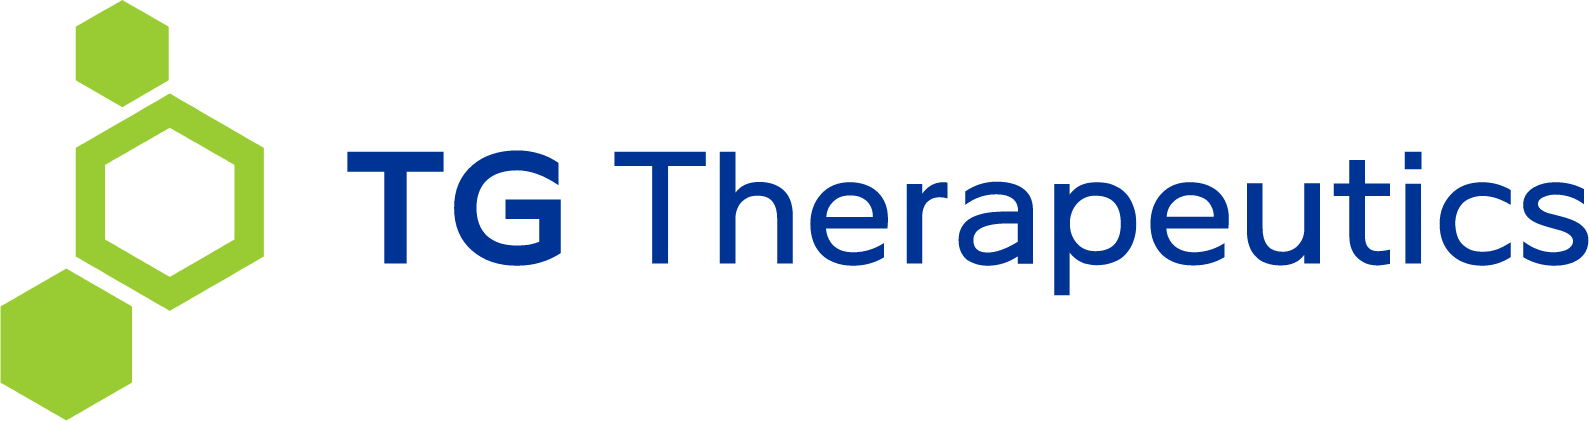 TG Therapeutics logo large (transparent PNG)